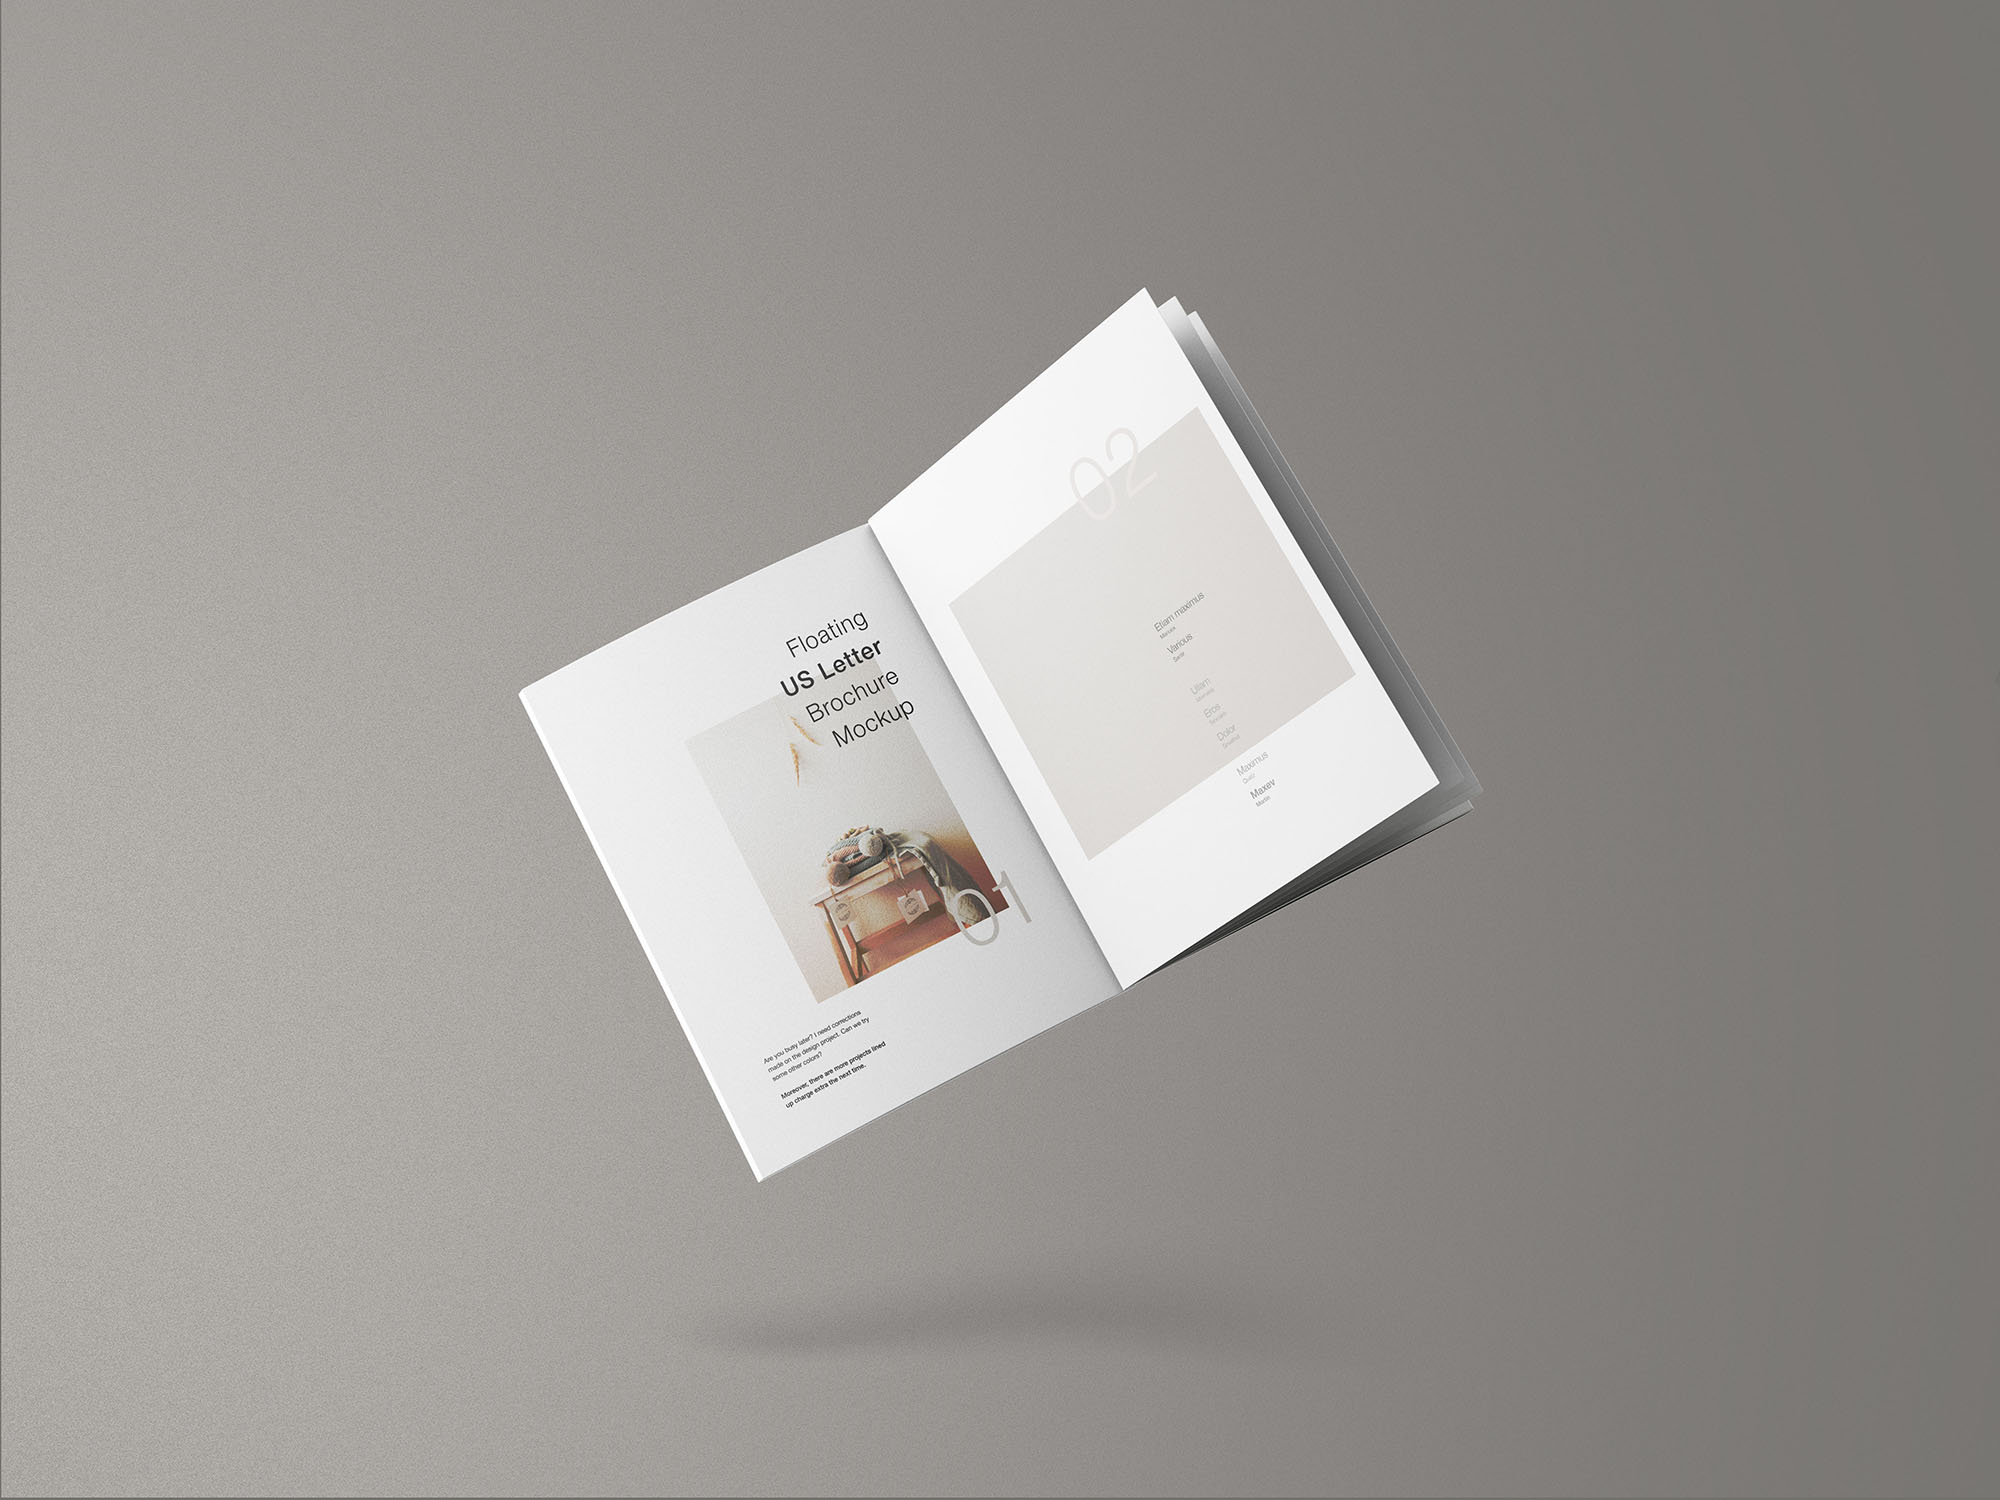 极简设计风格悬浮美国信纸尺寸宣传单设计图样机 Minimal Floating US Letter Brochure Mockup插图